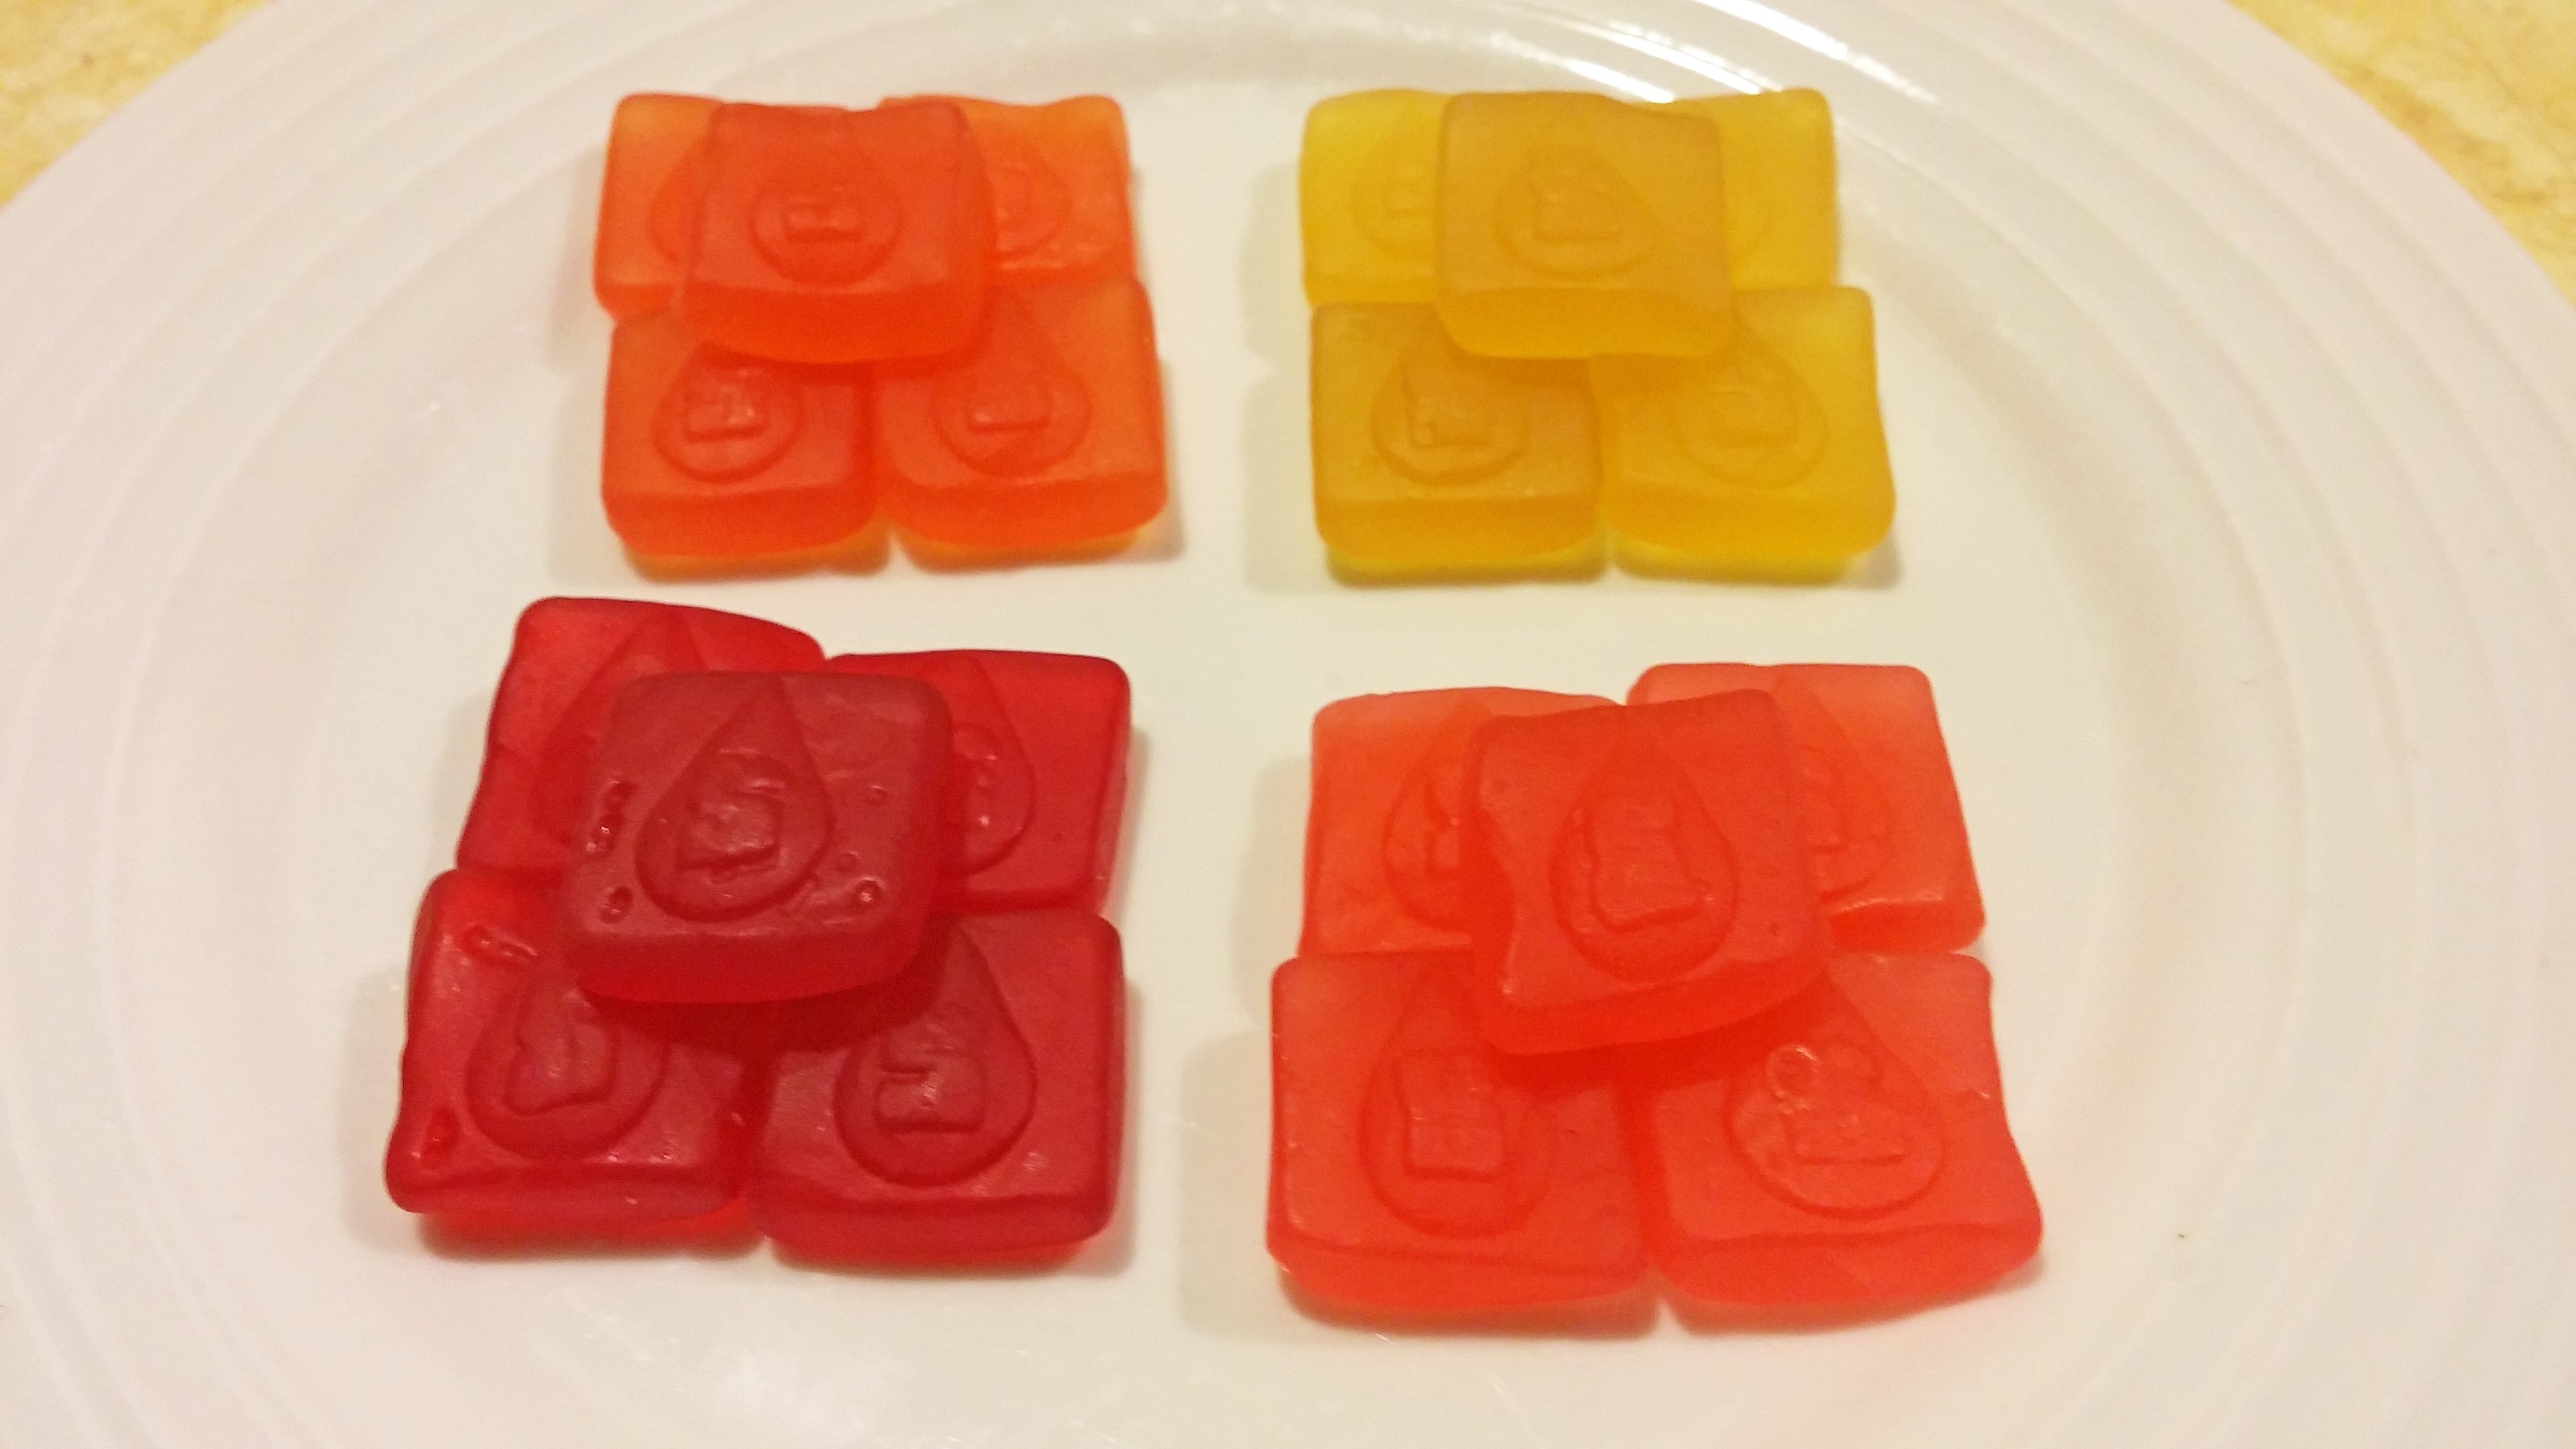 Original Flavors (clockwise from top left): Orange, Lemon, Strawberry and Cherry (Credit: CBSDetroit.com)